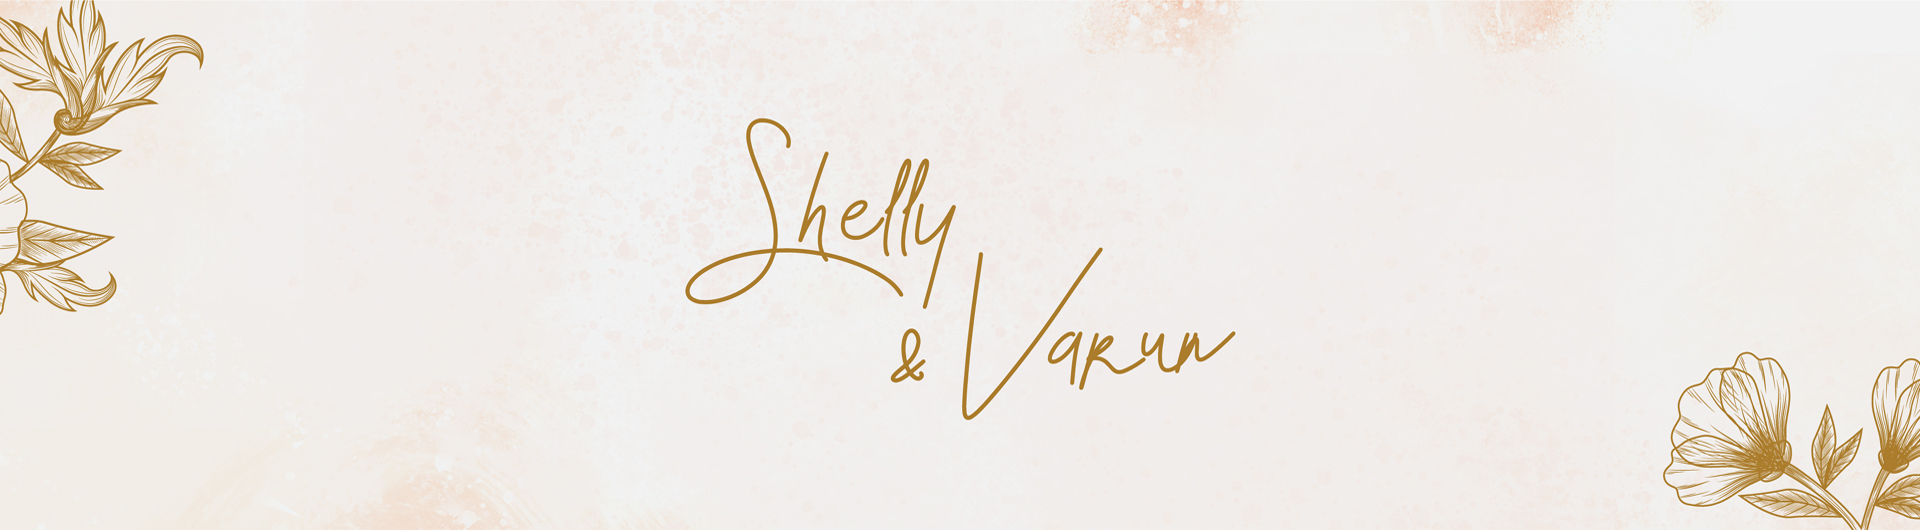 Shelly And Varun